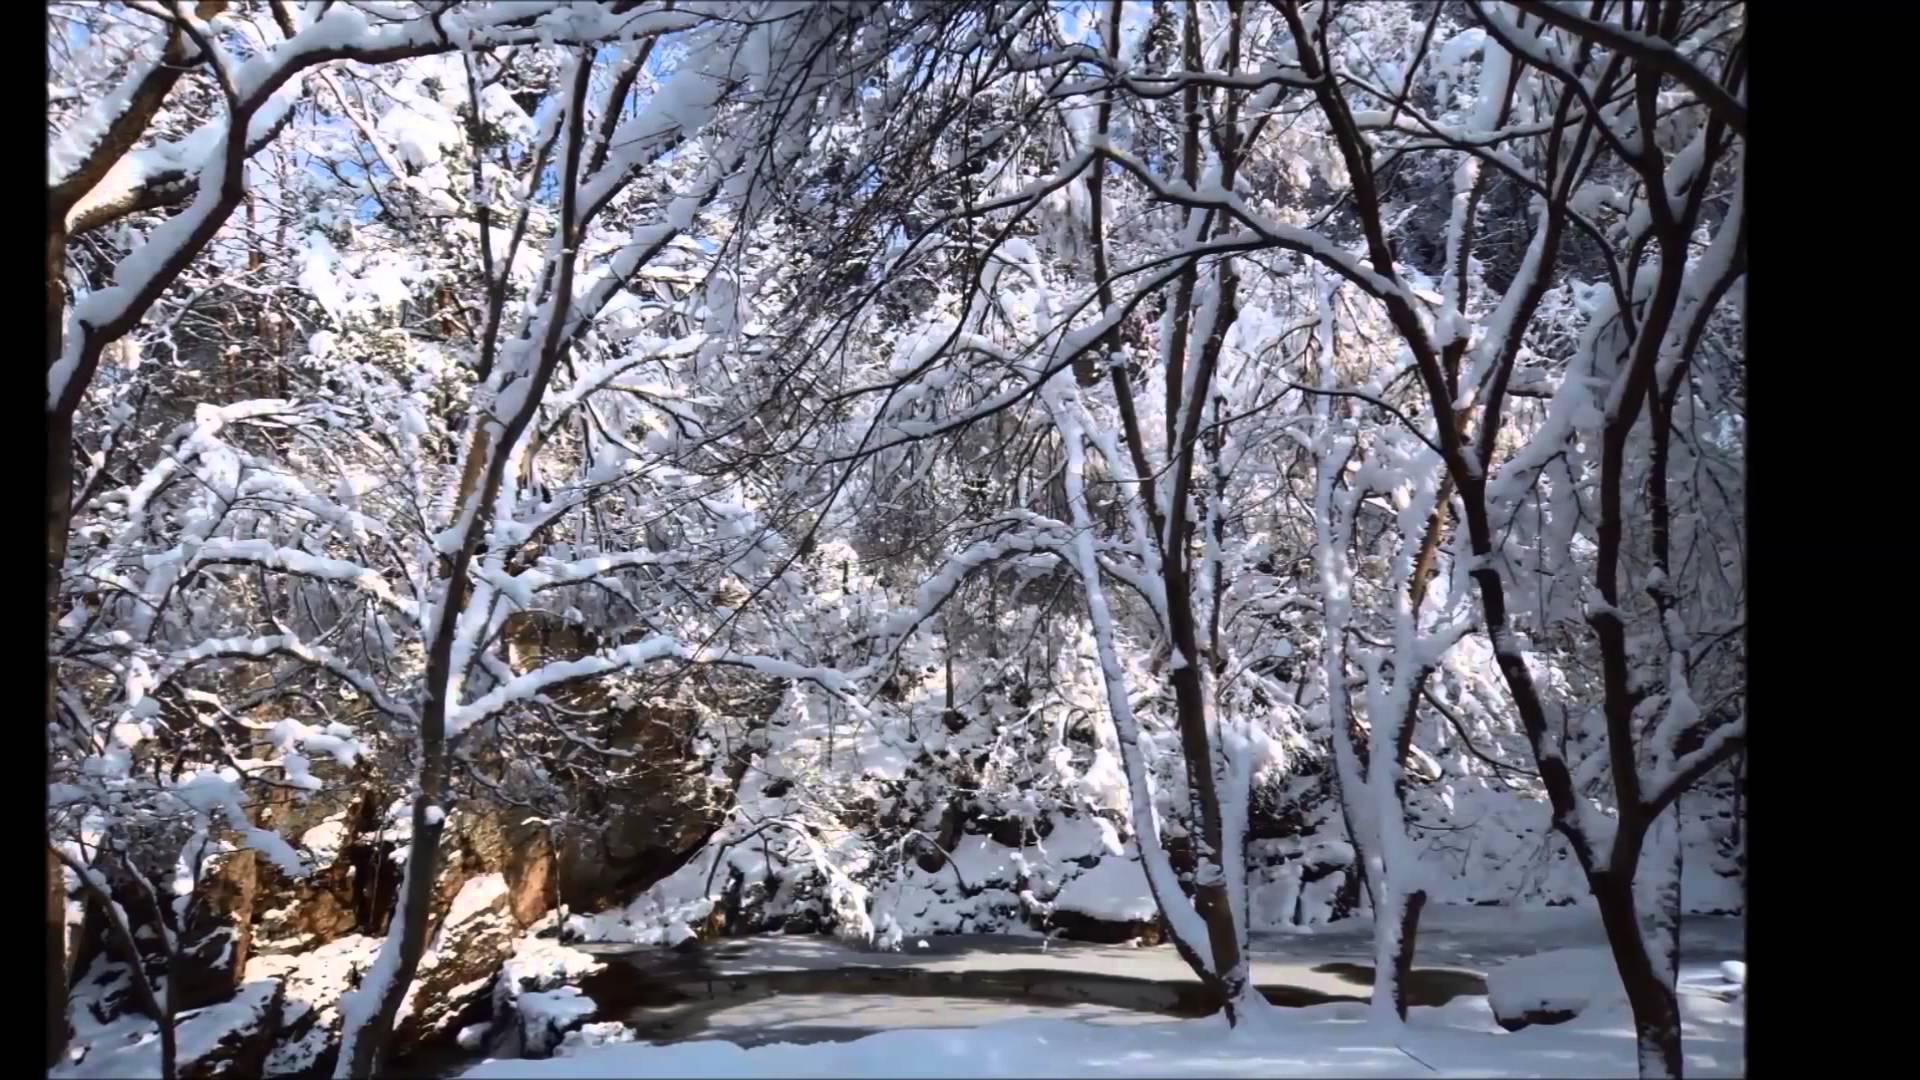 south korea winter scenery